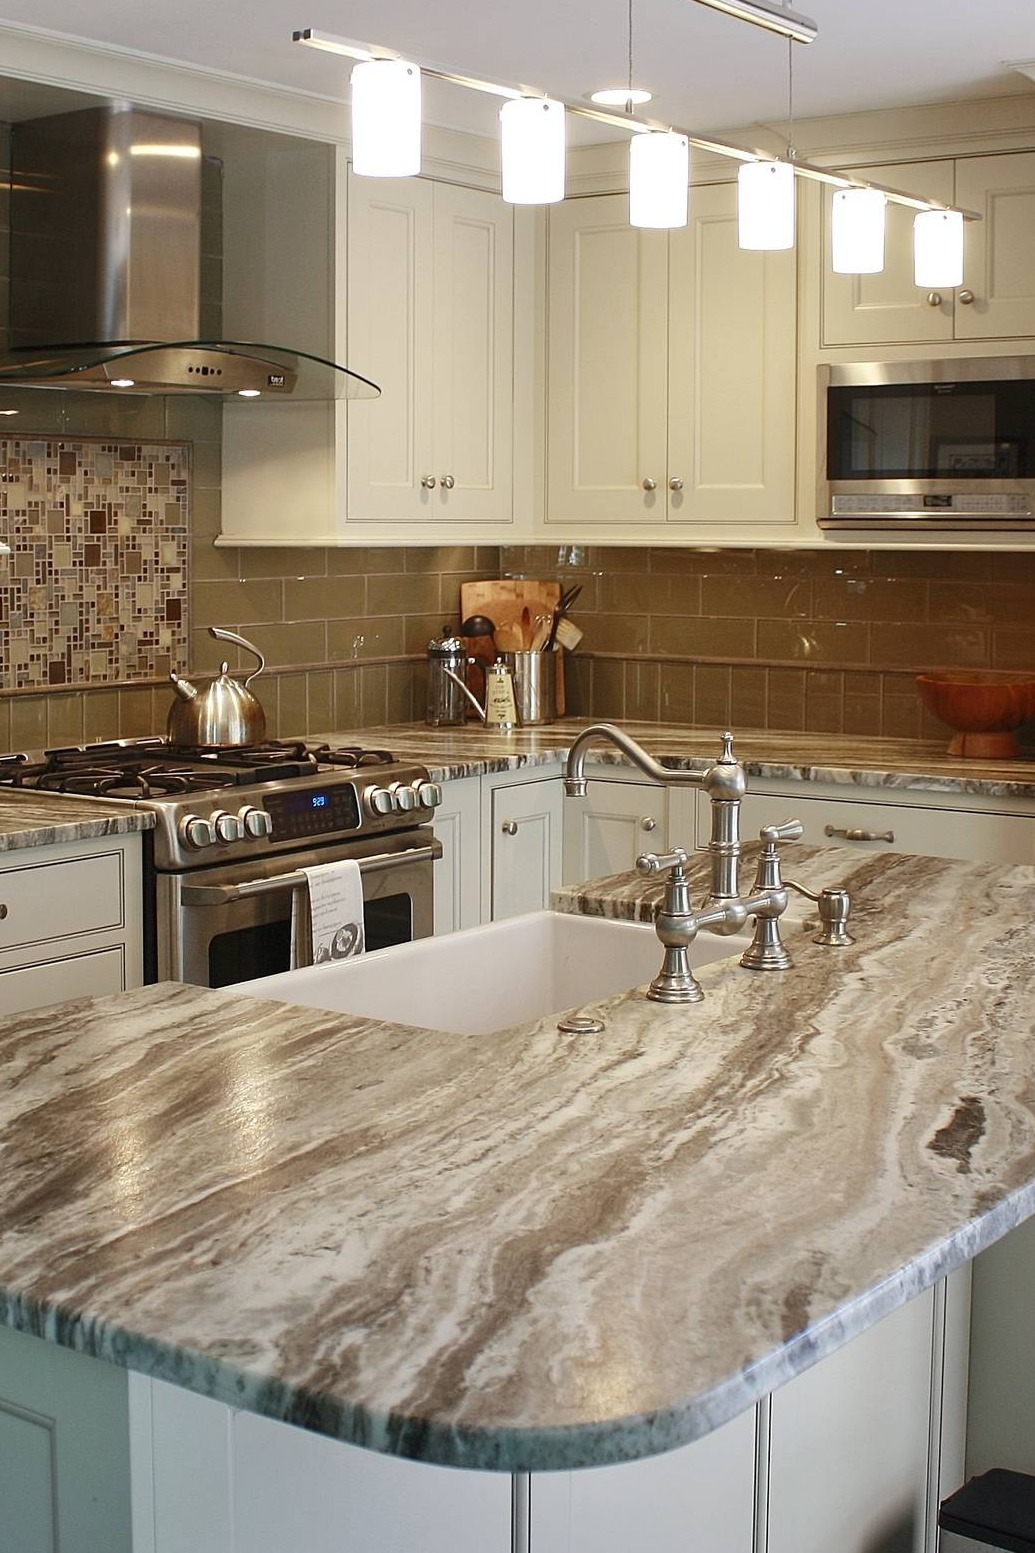 Brown Fantasy Leathered Granite Countertop White Cabinet Taupe Backsplash Tile Farmhouse Sink